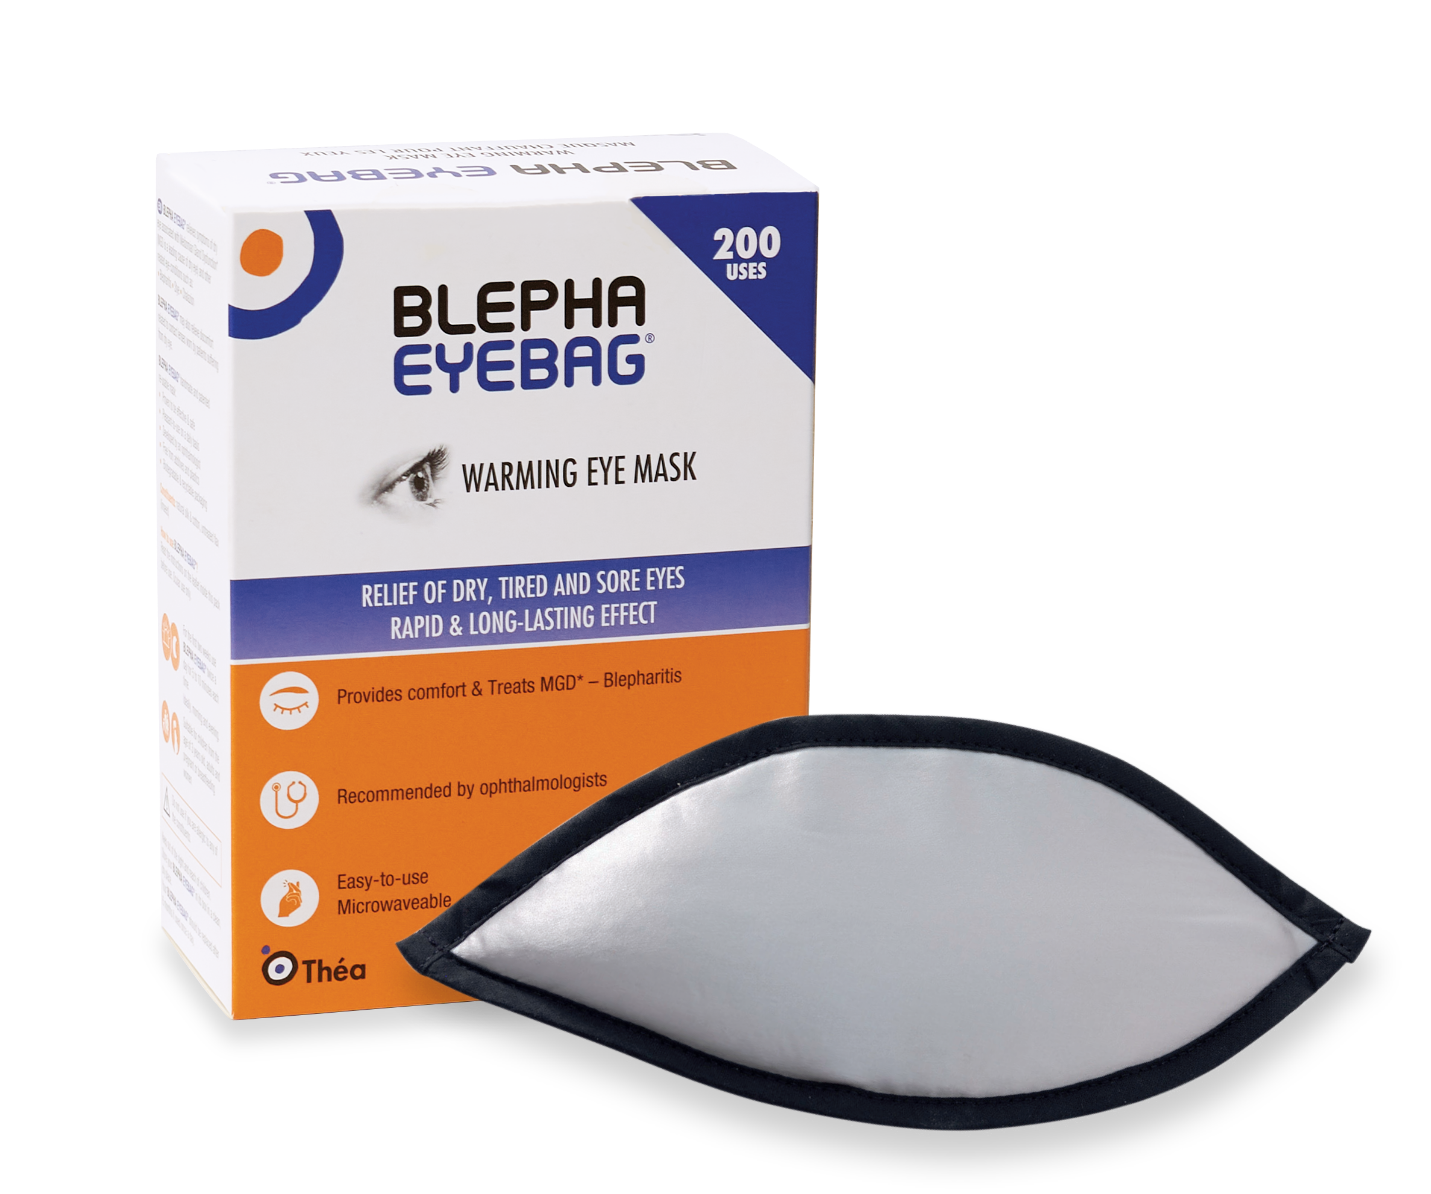 Blepha EyeBag